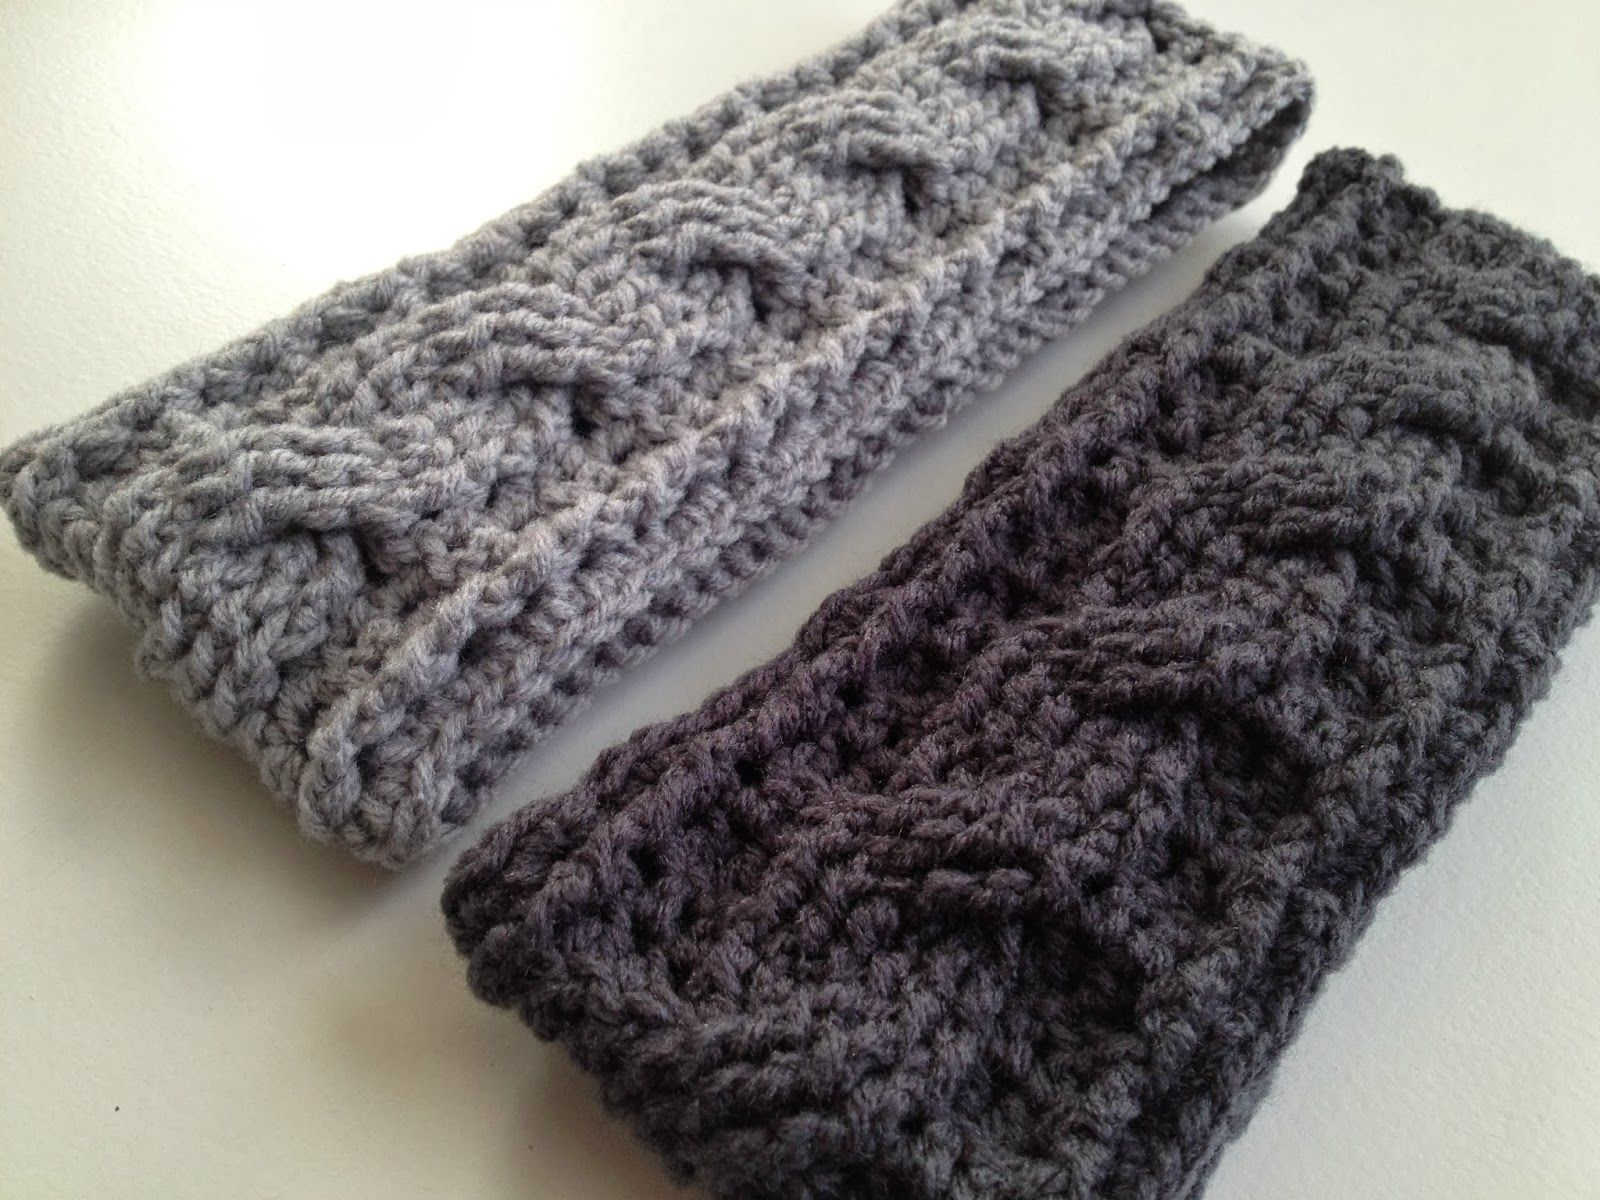 Crochet Headbands Ear Warmers Patterns Free Pin Amanda Miller On Crochet Ideas Pinterest Crochet Cable